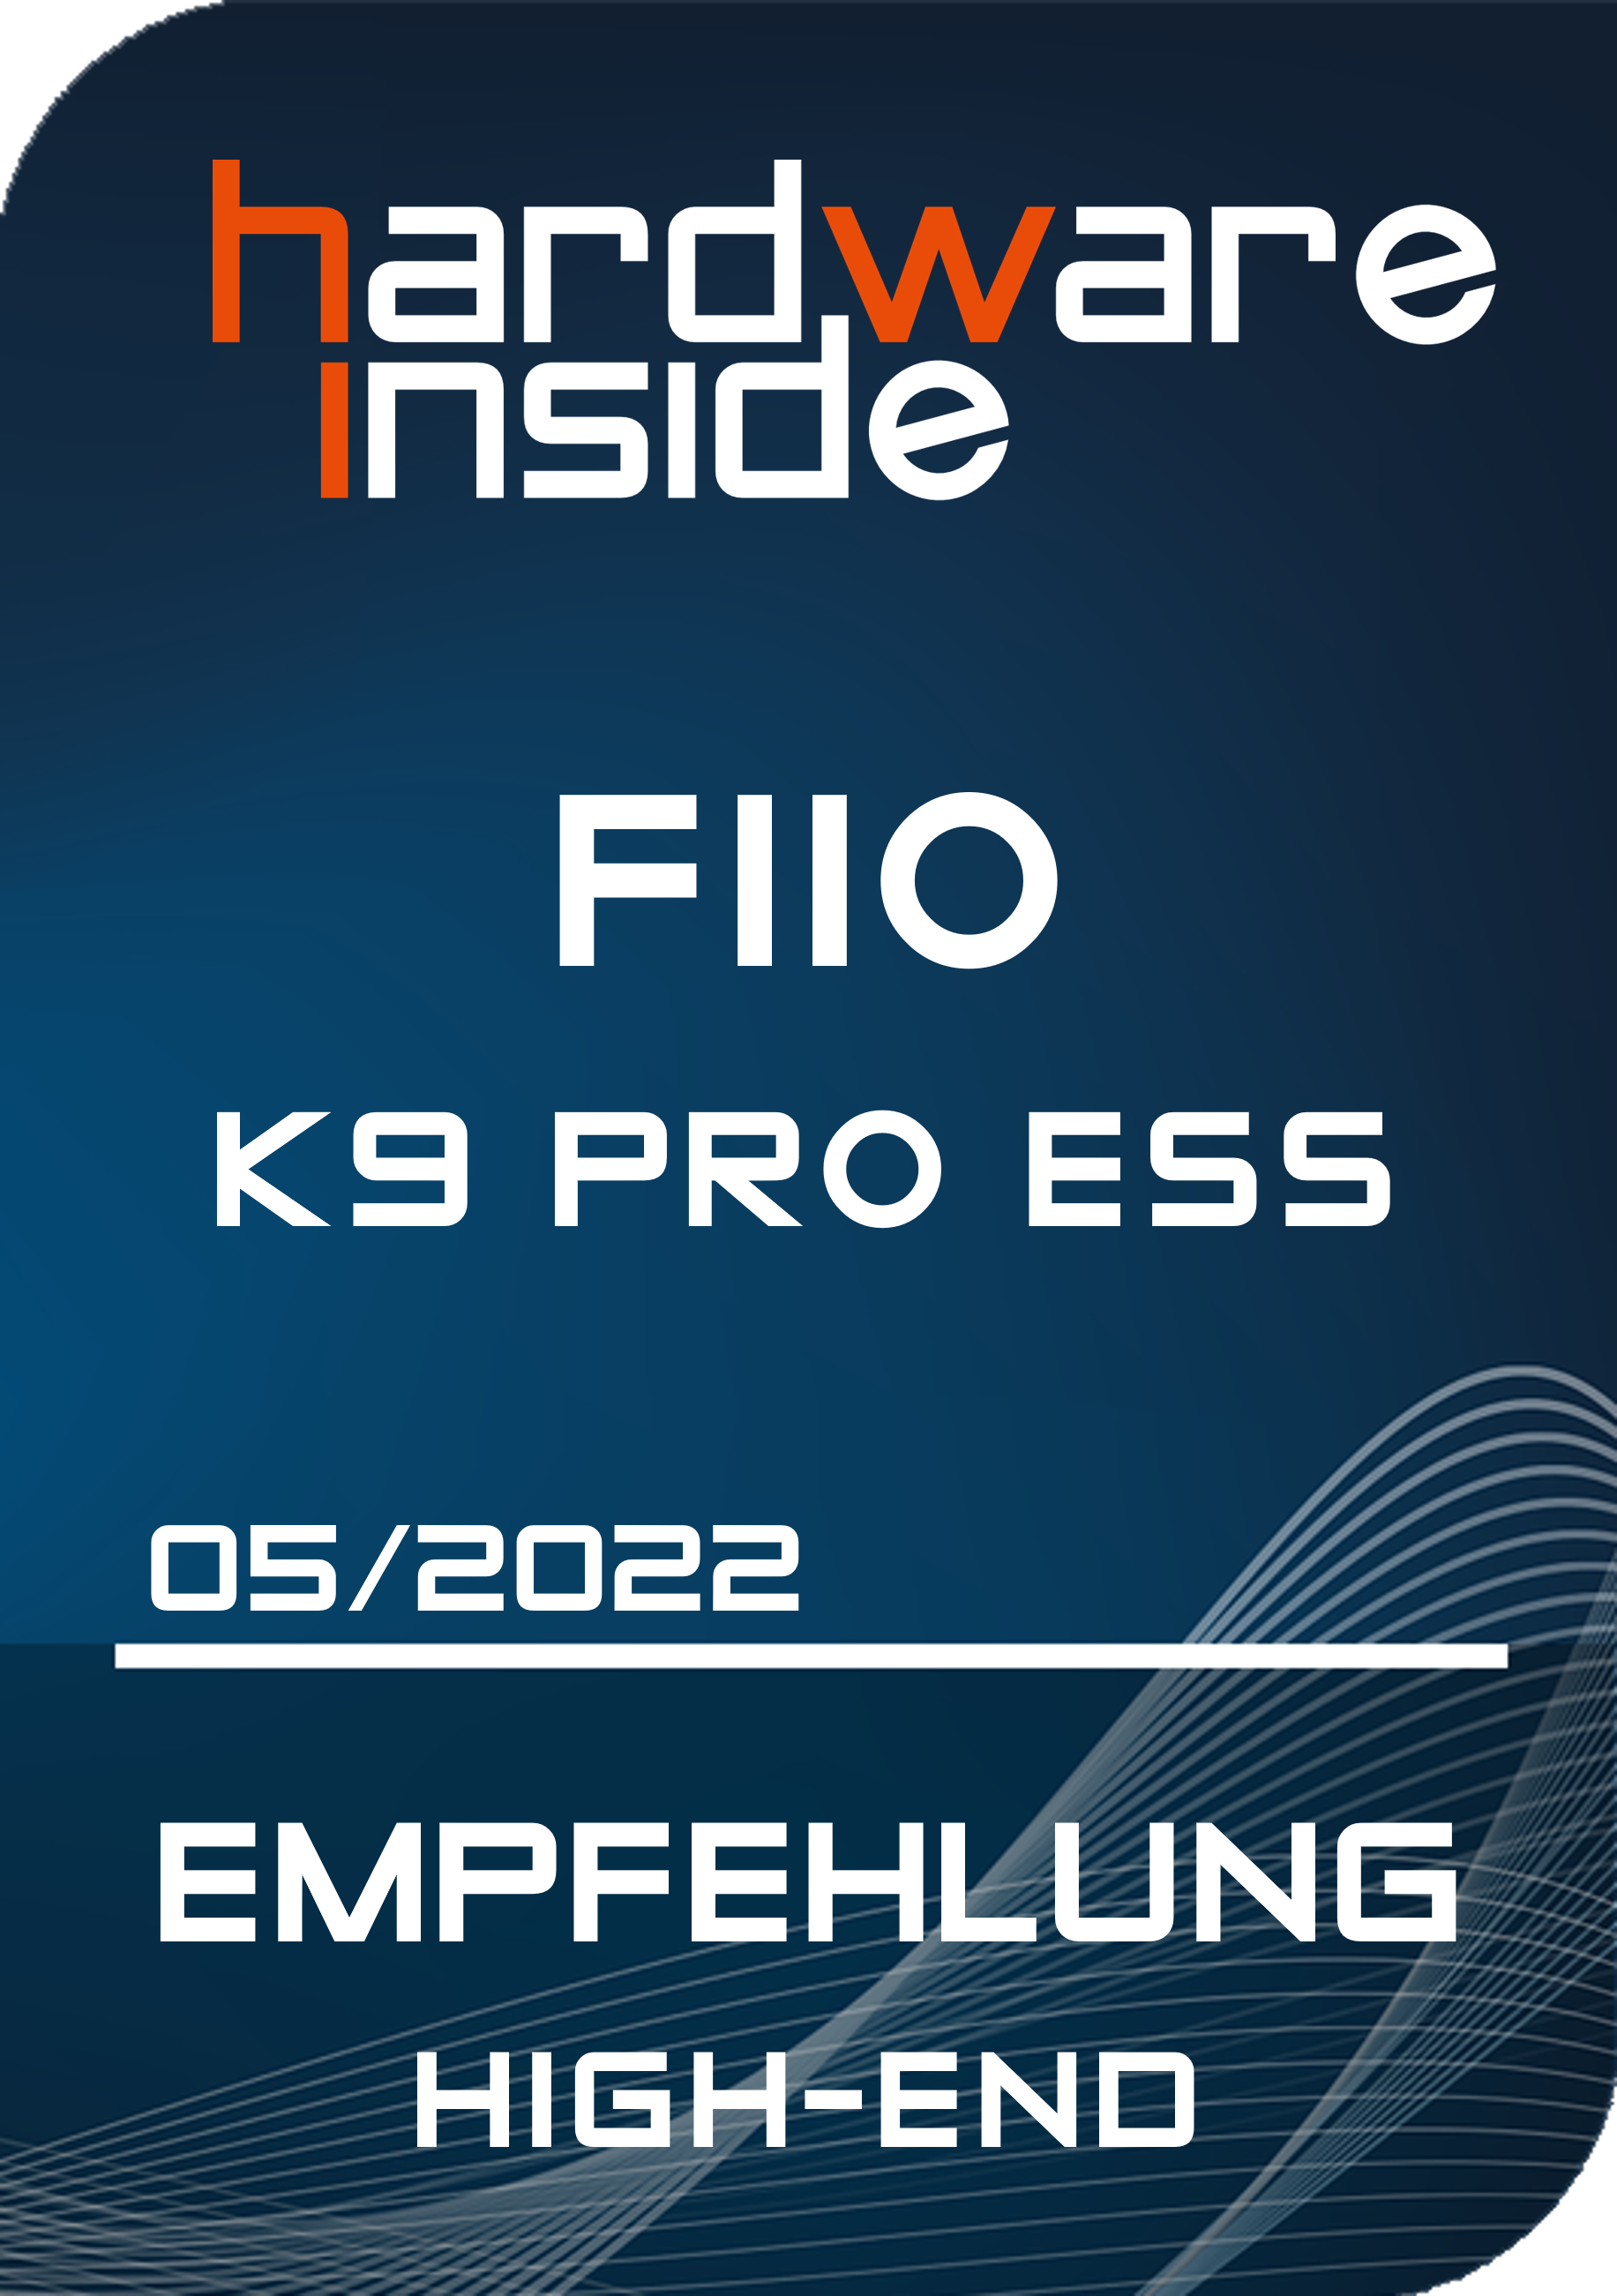 fiio-k9-pro-ess-im-test-award-highres.png